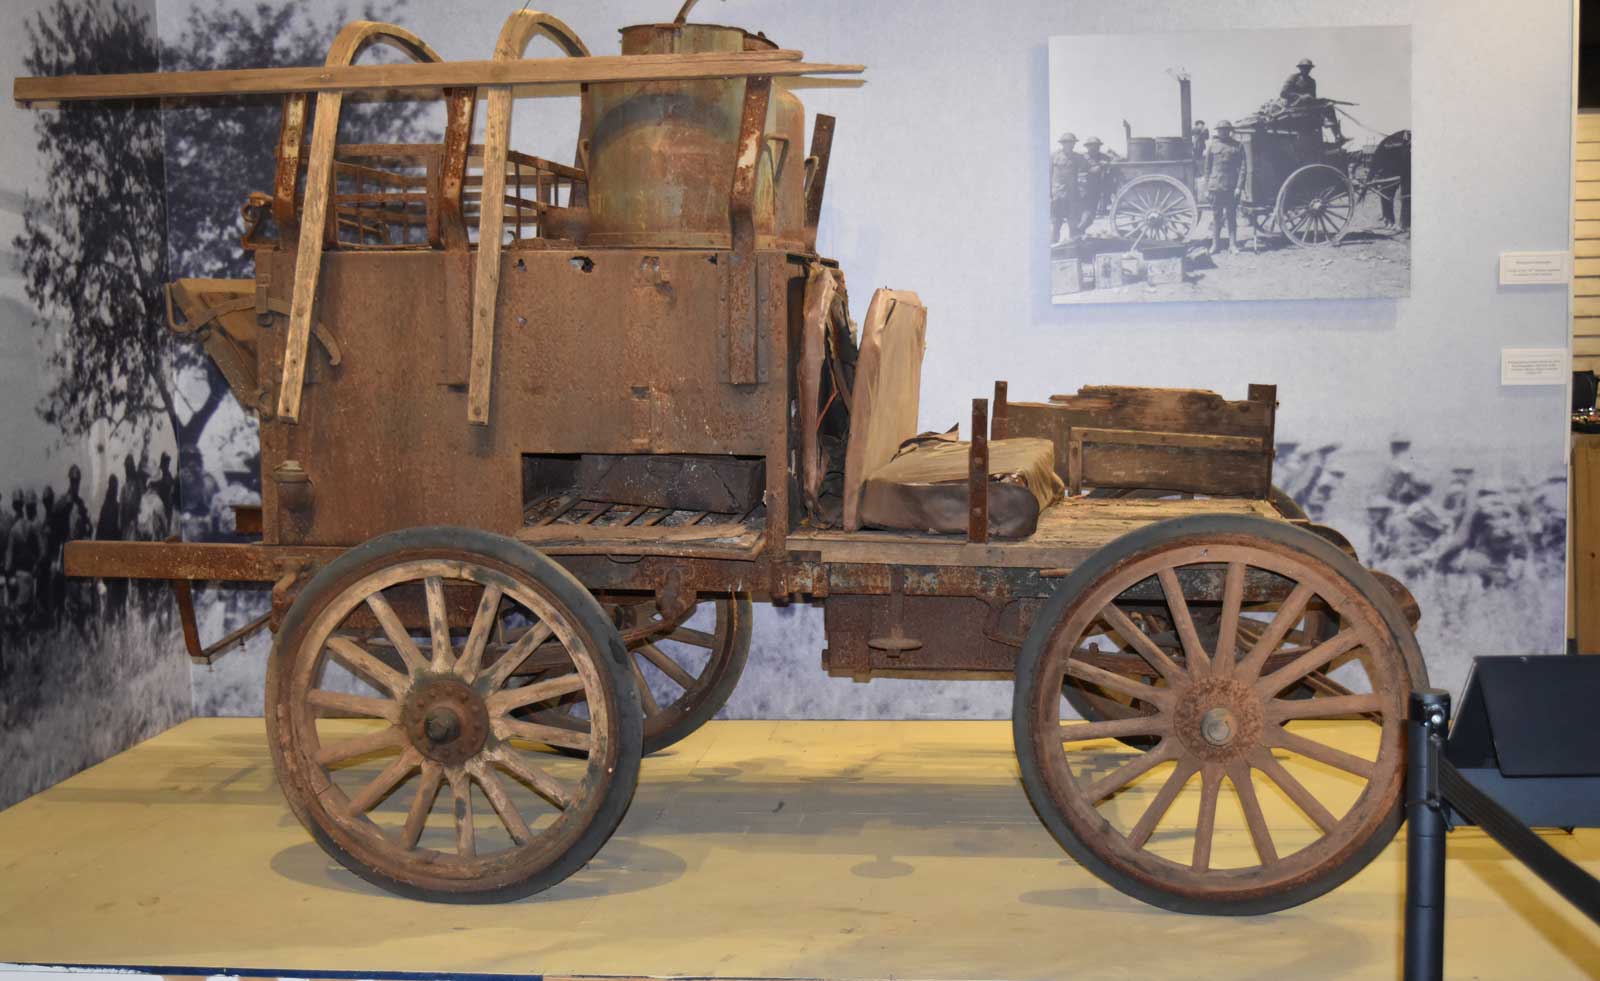 trailmobile shown before the restoration